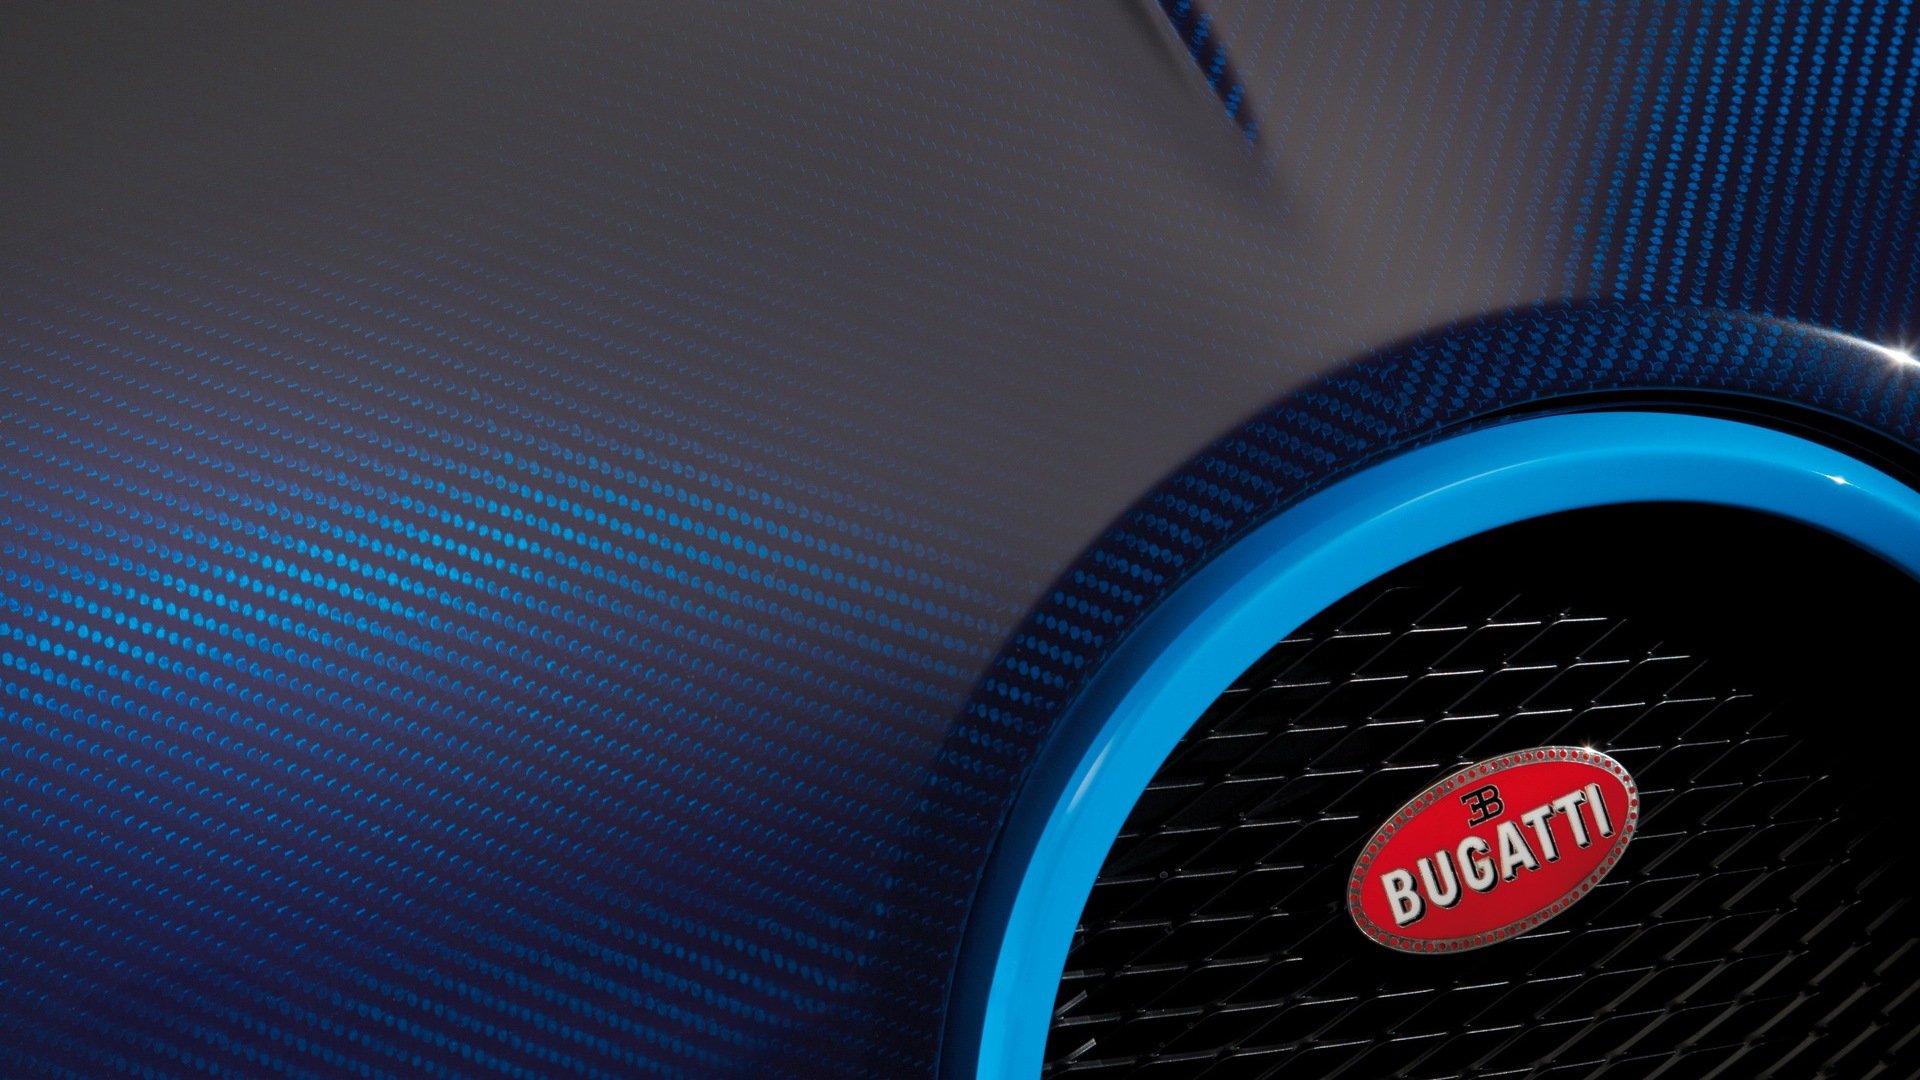 bugatti logo cars 2014 wallpapers | Desktop Backgrounds for Free ...